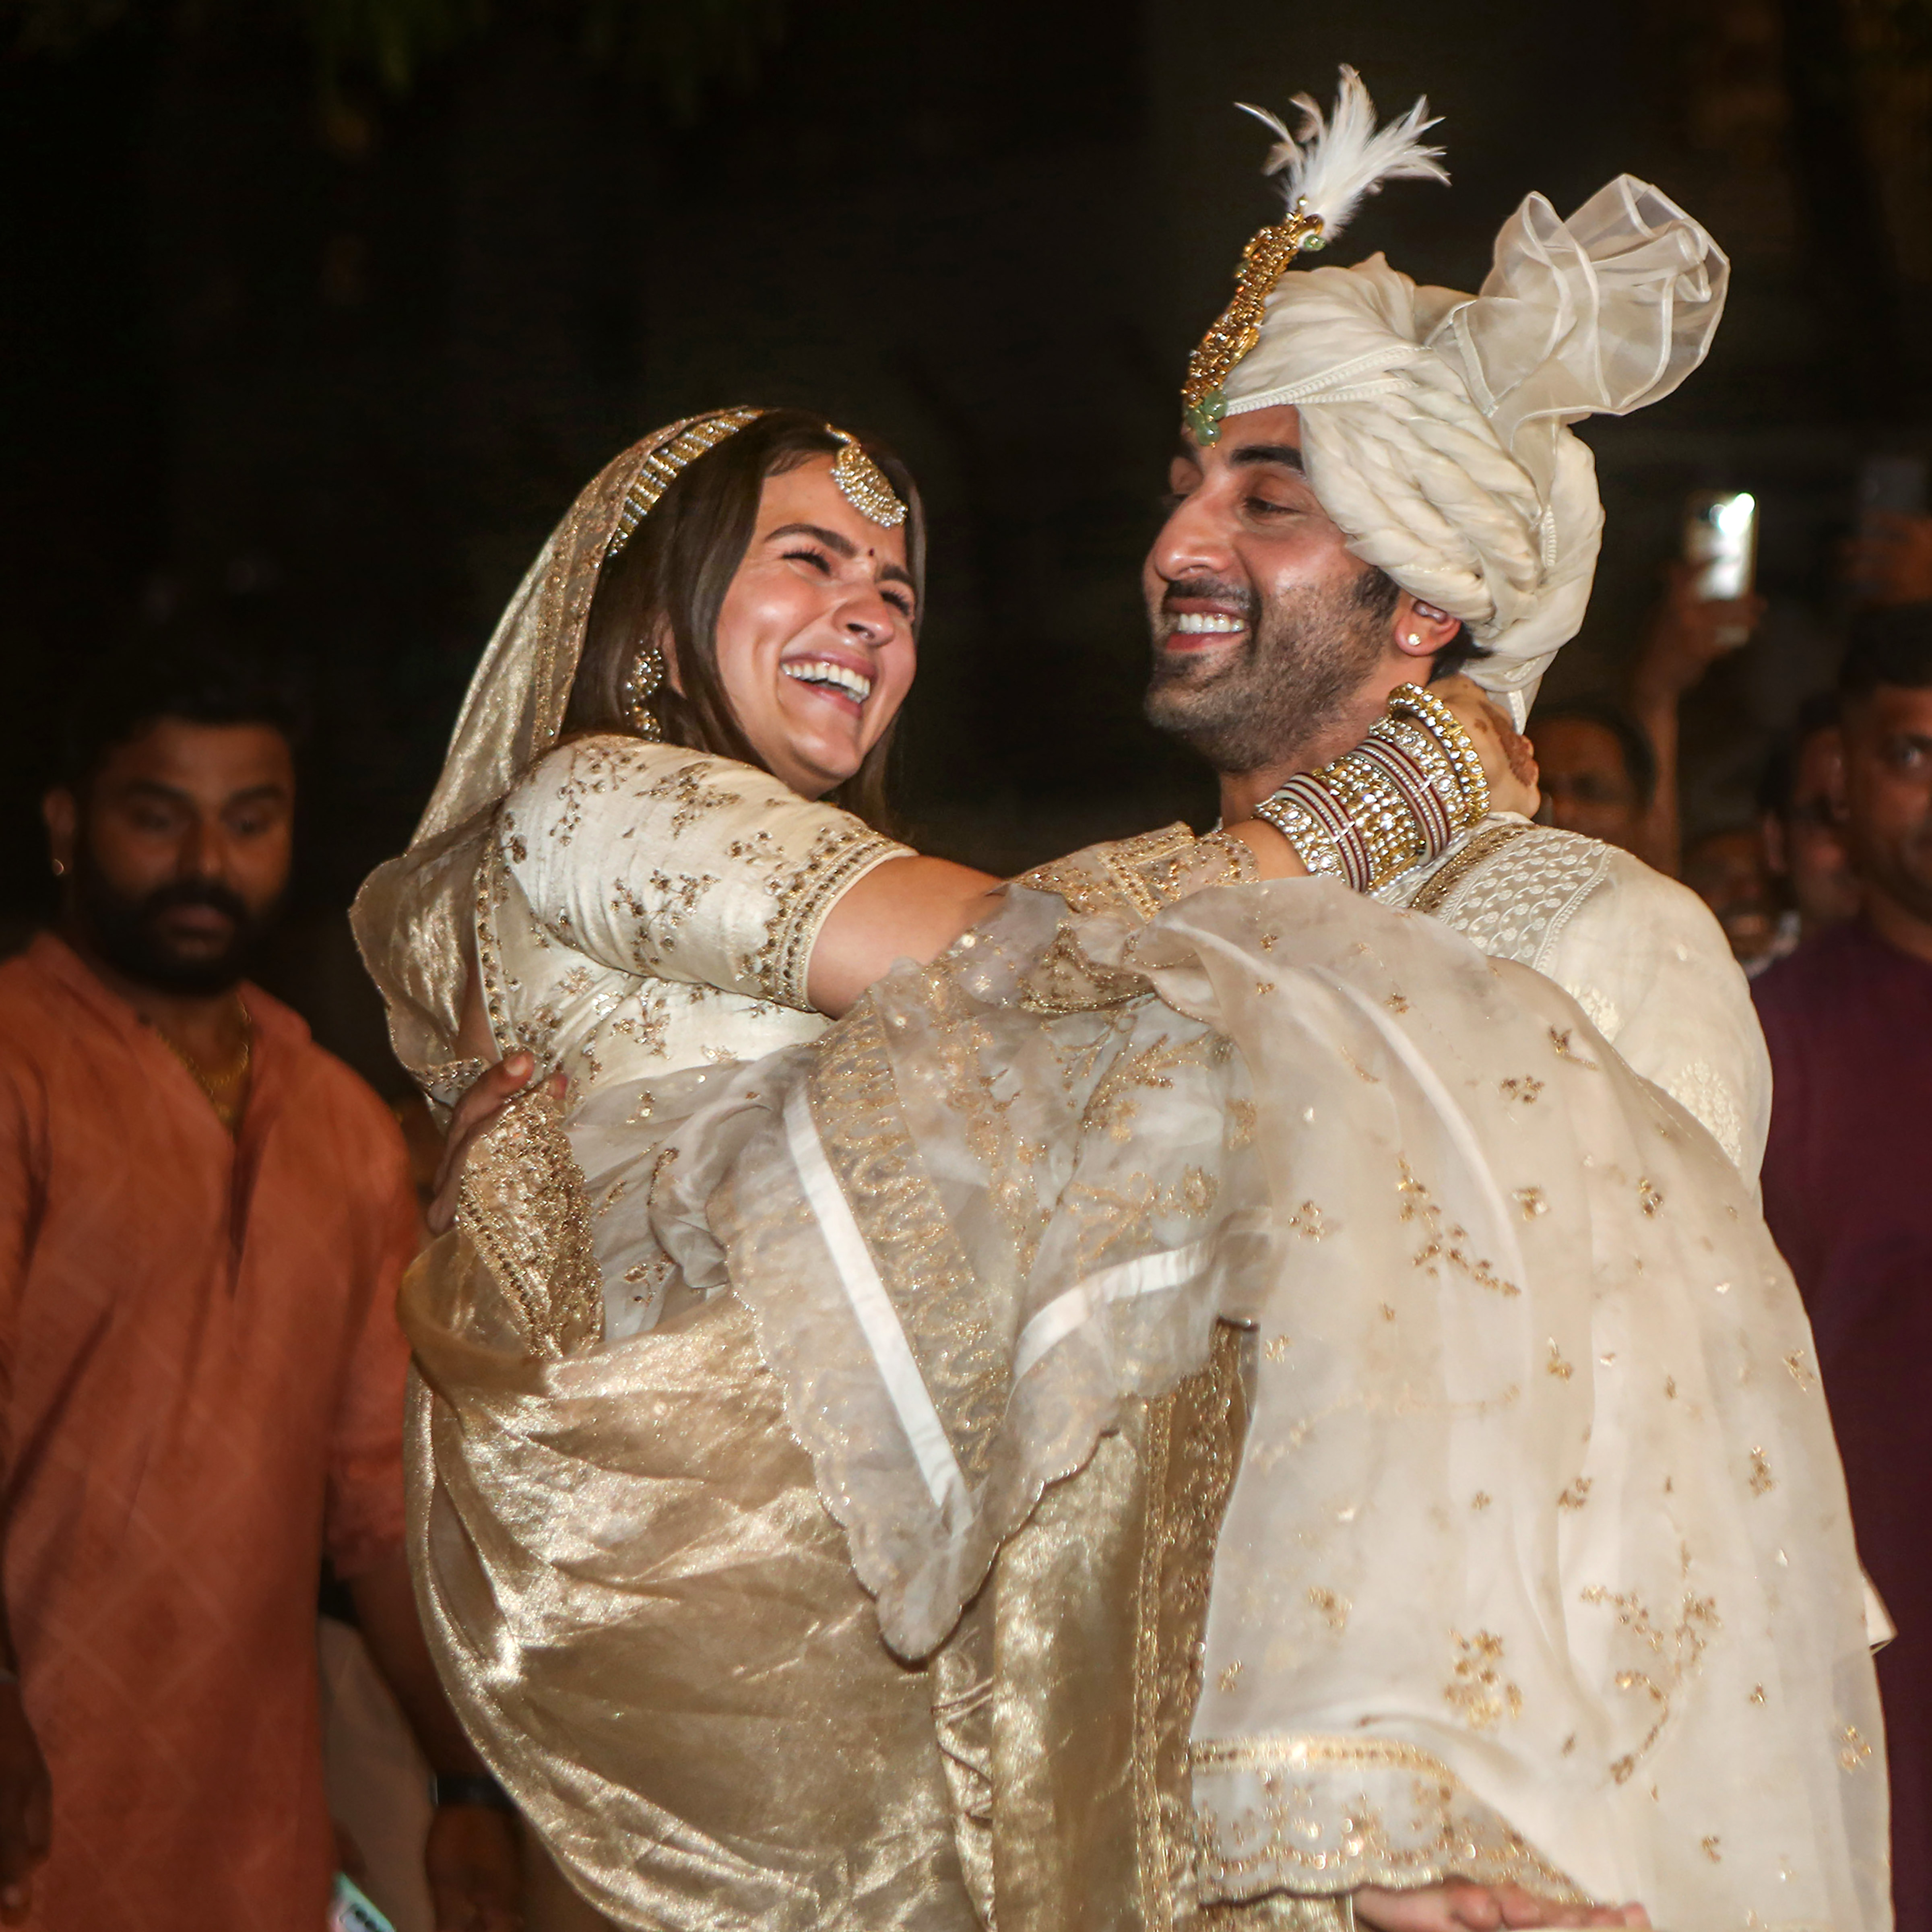 Watch: Alia Bhatt and Ranbir Kapoor's Sabyasachi outfits arrive at the  venue ahead of their wedding